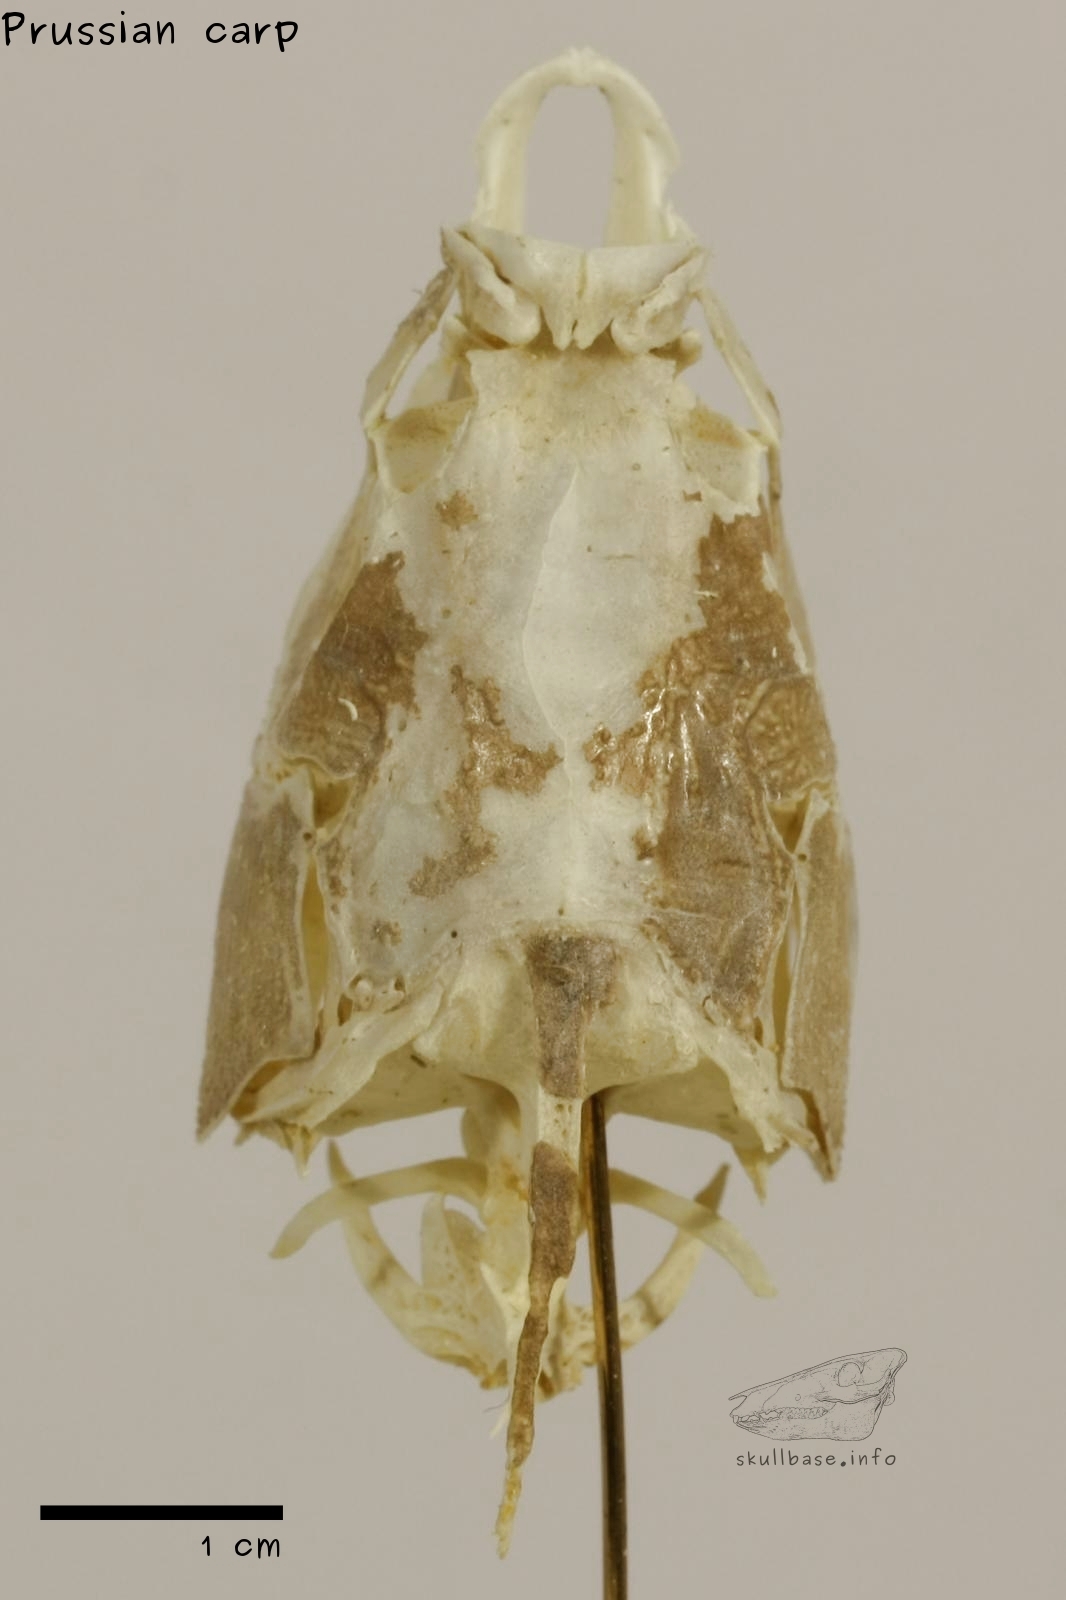 Prussian carp (Carassius gibelio) skull ventral view